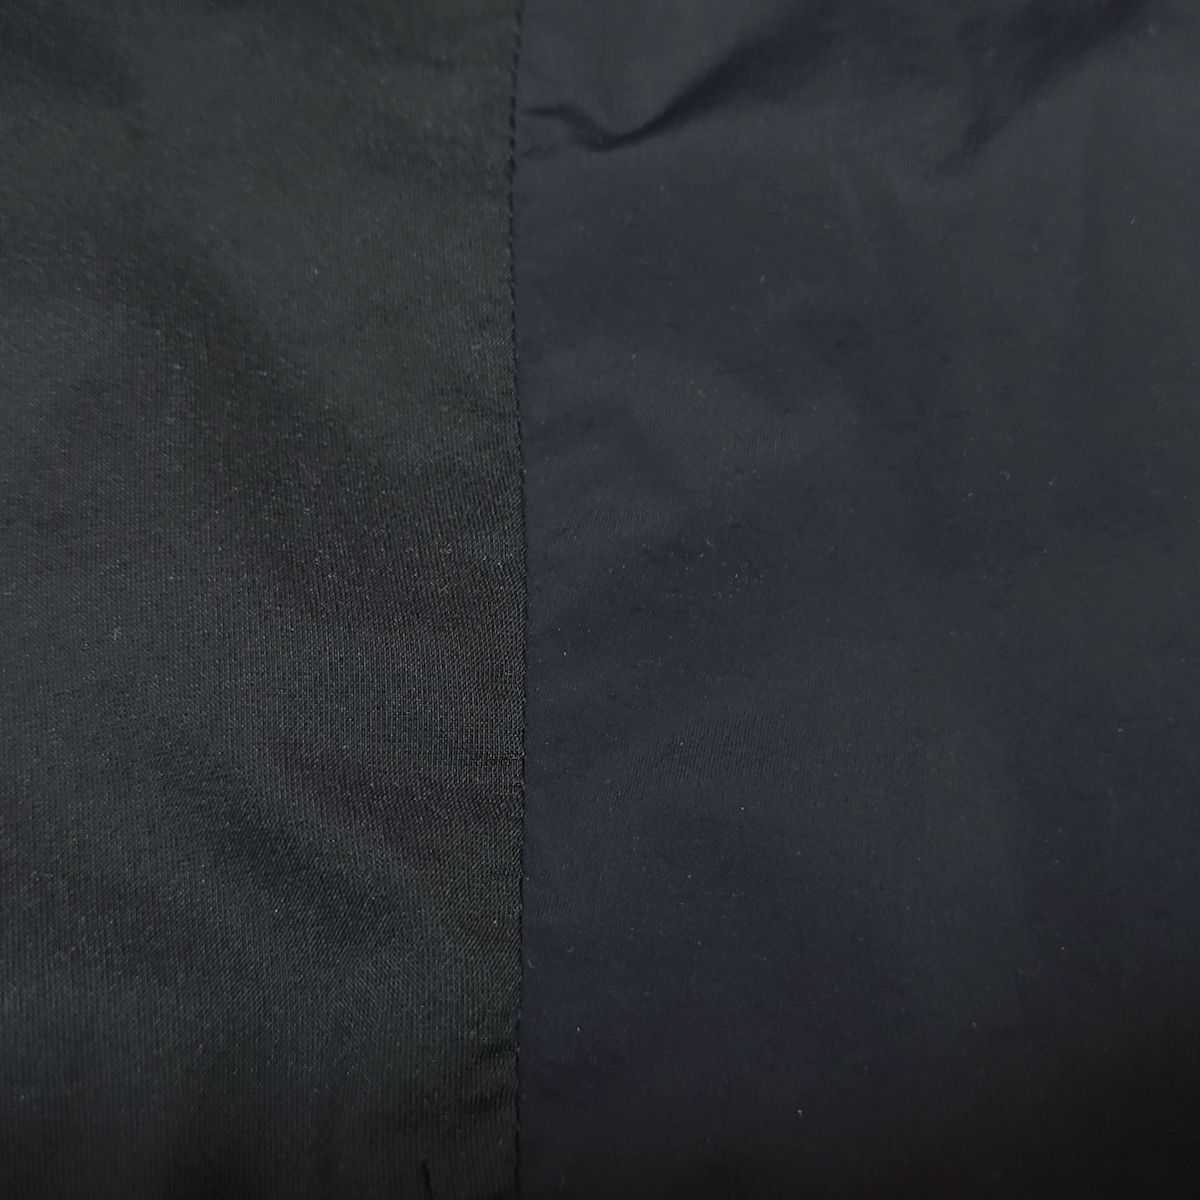 BRIEFING(ブリーフィング) ブルゾン サイズS メンズ - 黒 長袖/ジップアップ/春/秋 - メルカリ